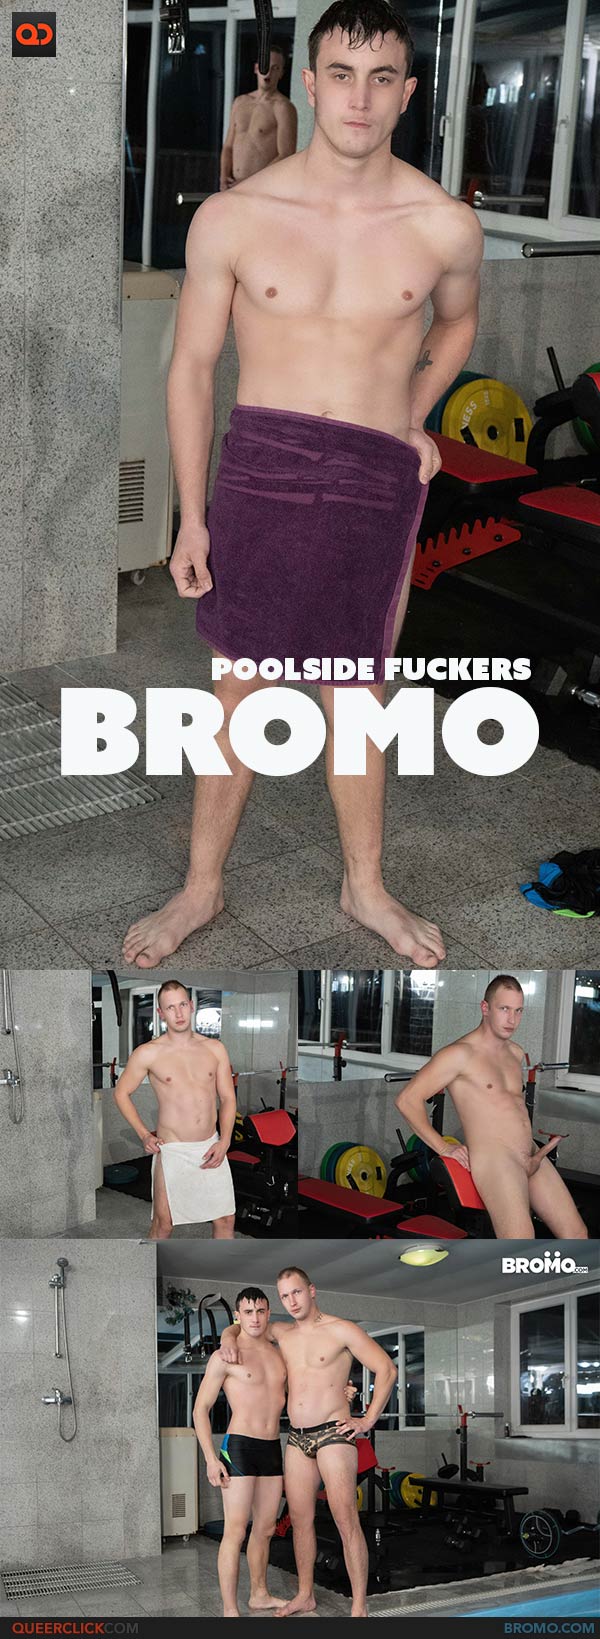 Bromo: Poolside Fuckers